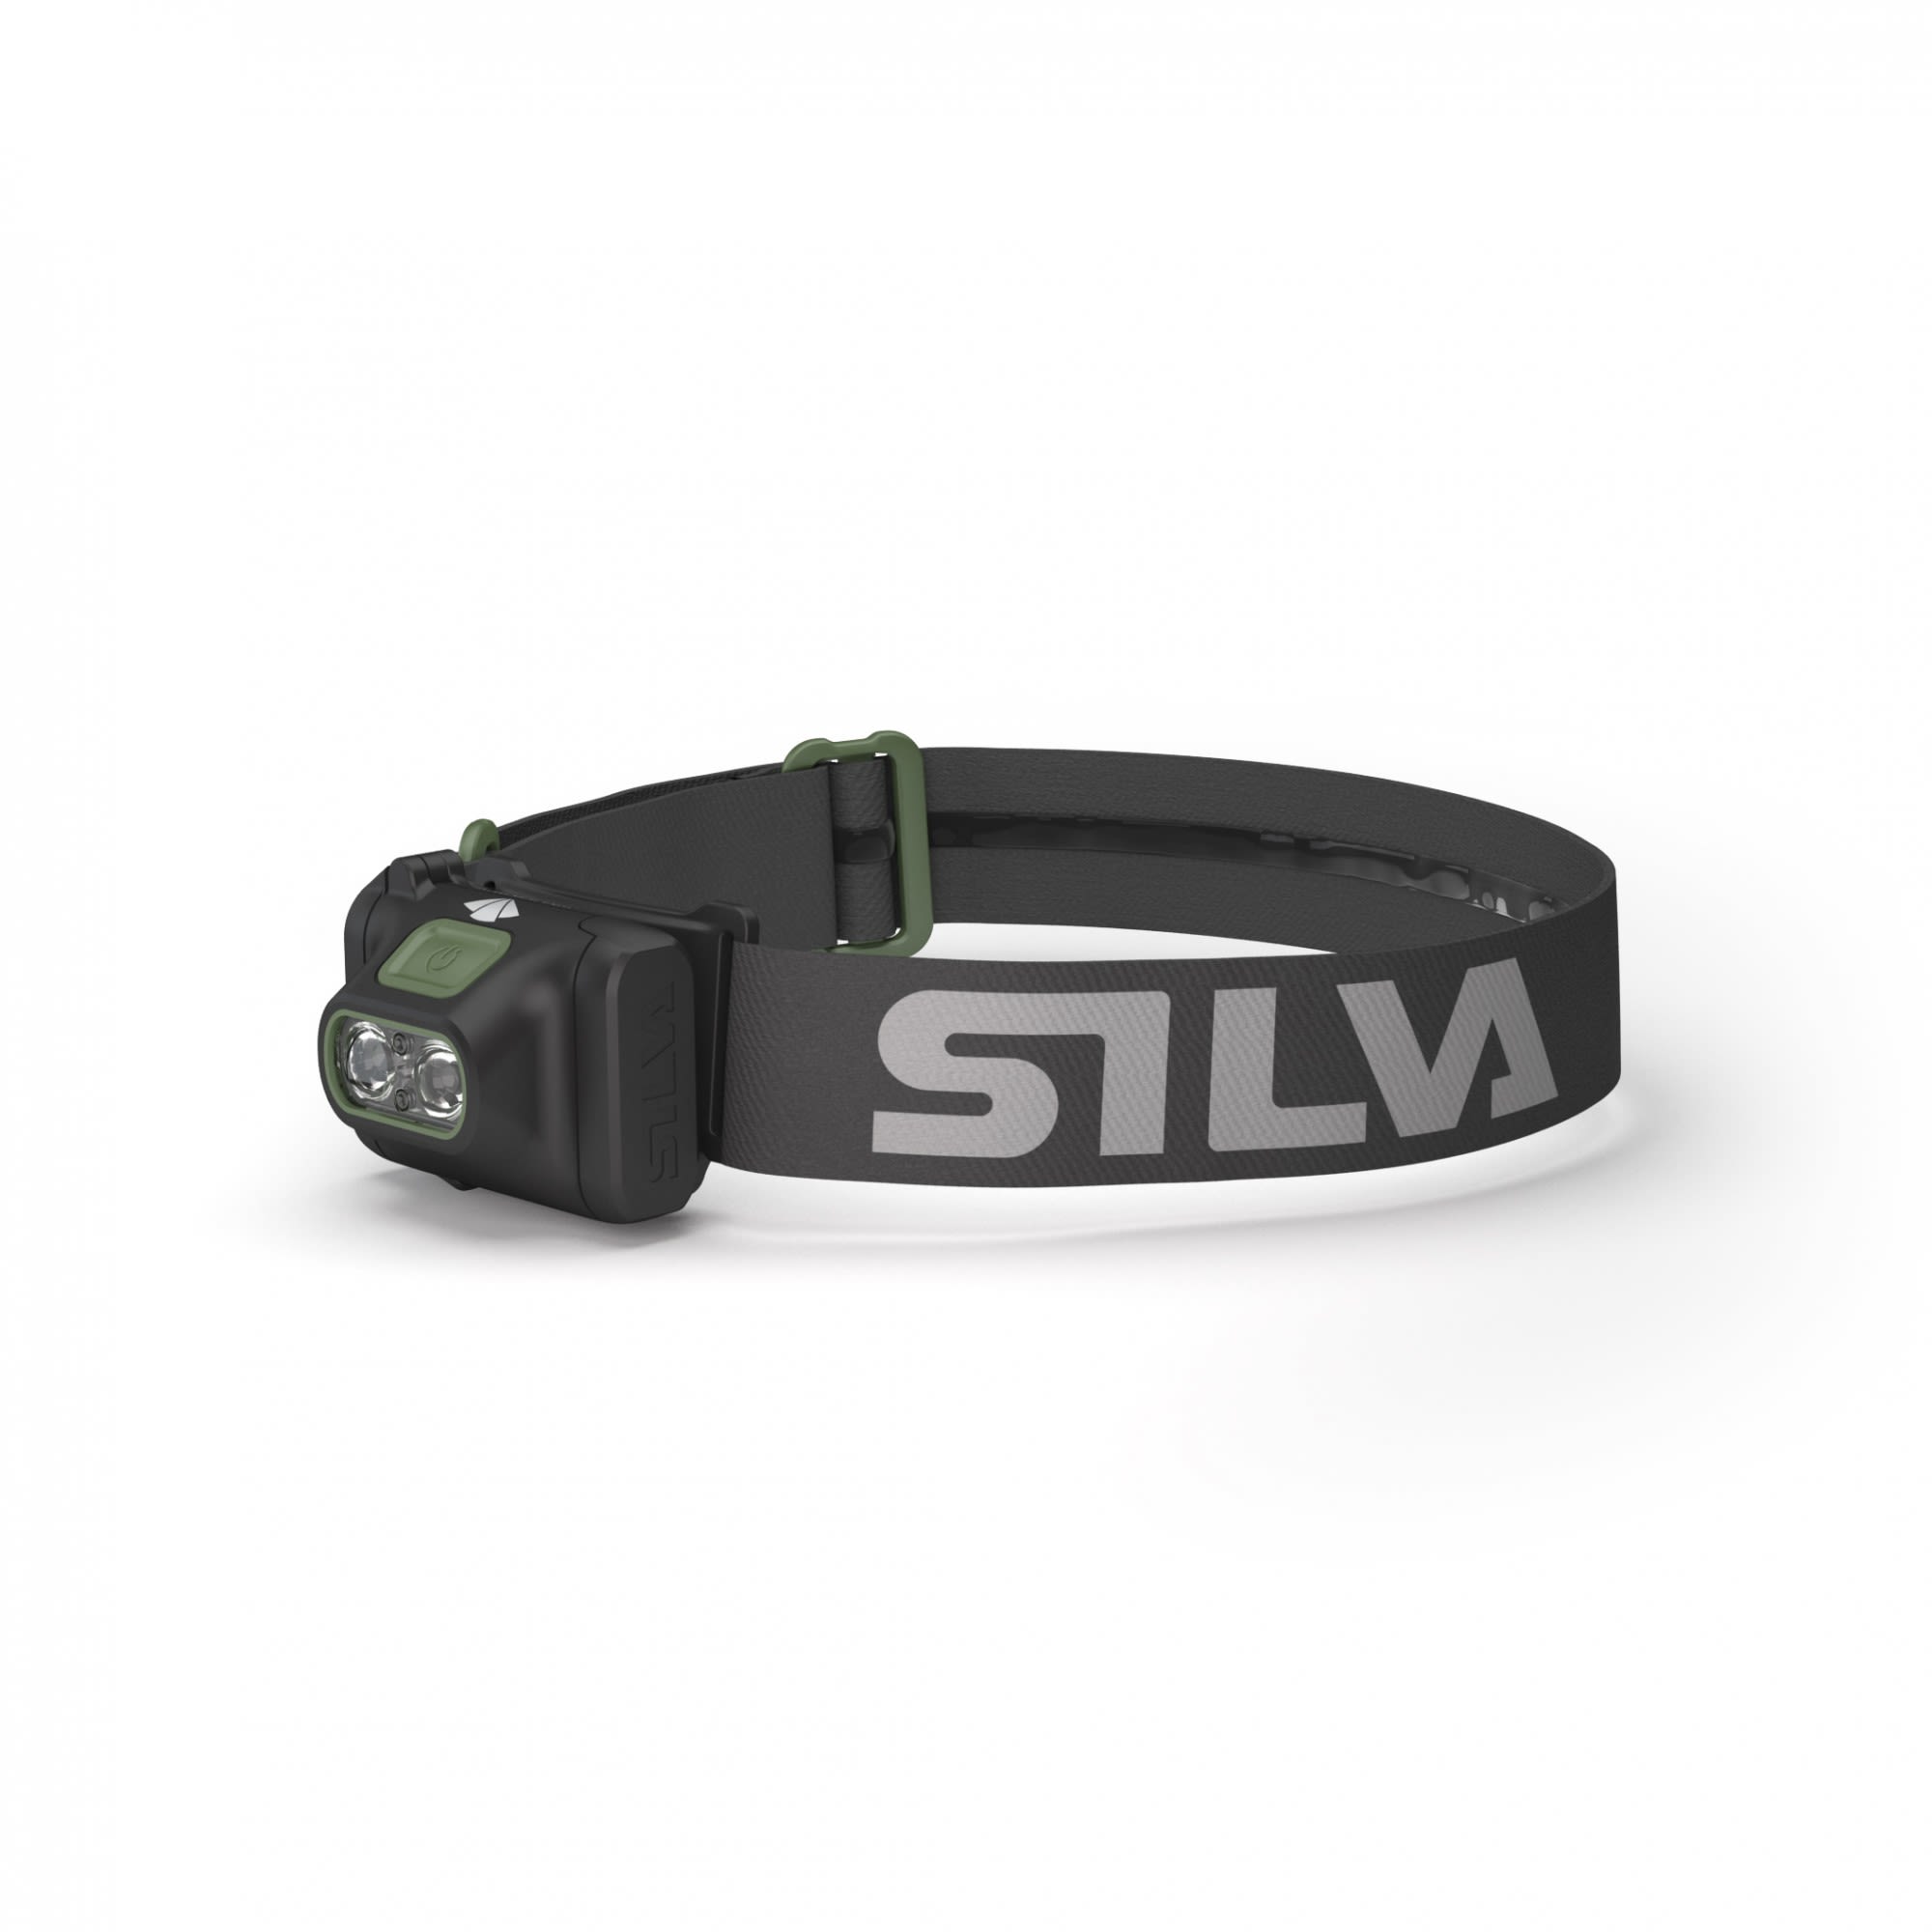 Silva Scout 3X Schwarz- Stirnlampen- Grsse One Size - Farbe Black - Green